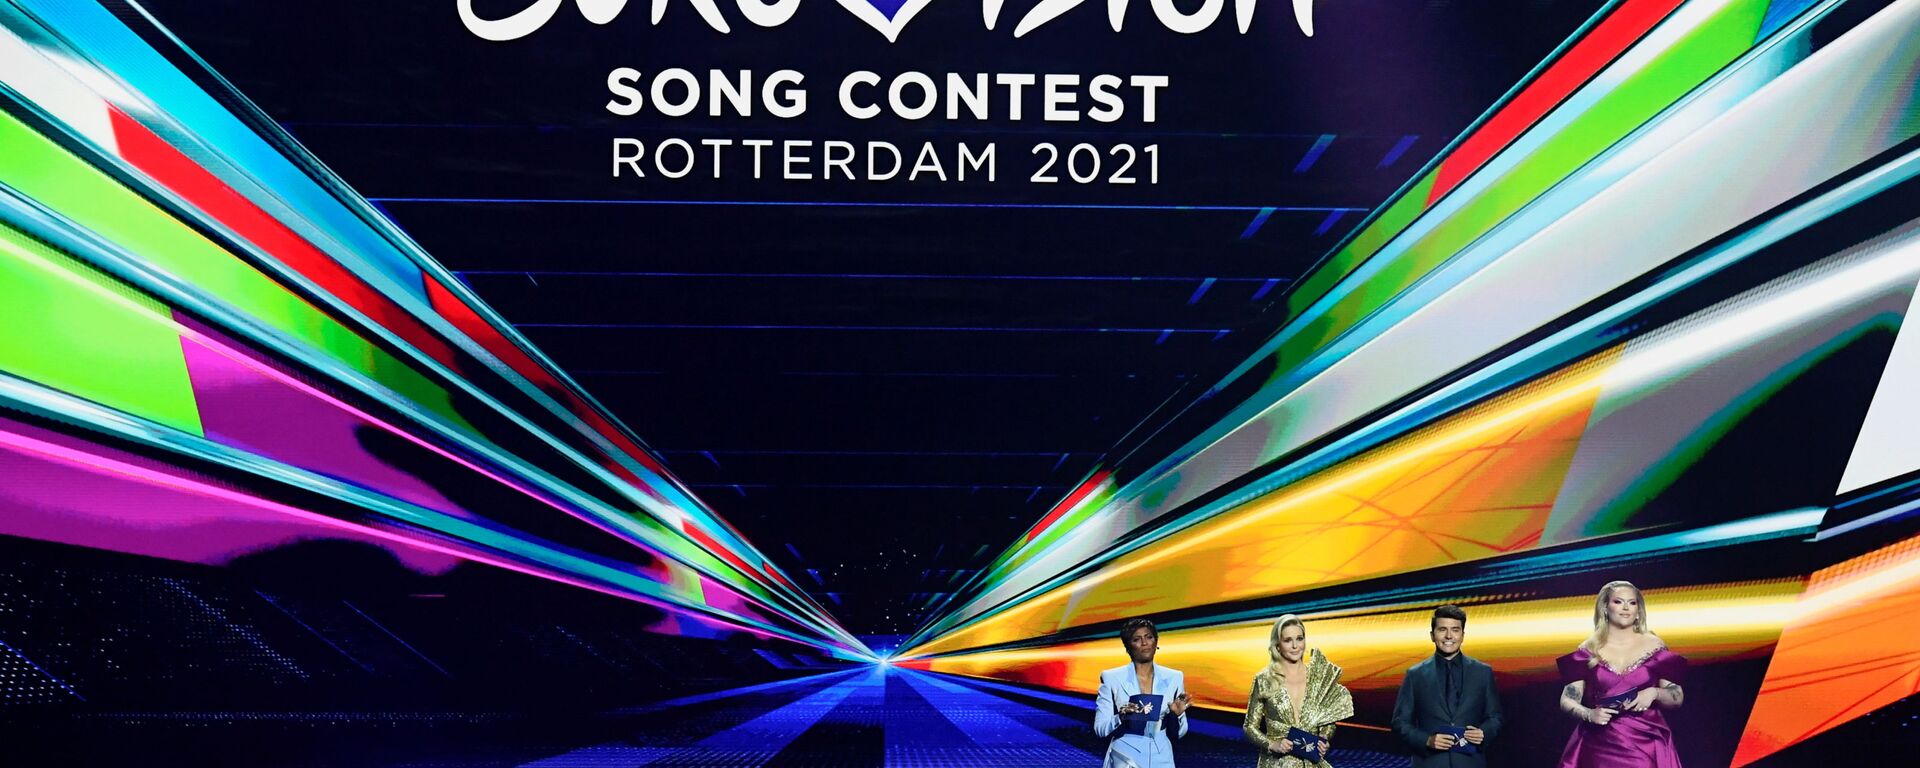 Presenters Edsilia Rombley, Chantal Janzen, Jan Smit and Nikkie de Jager attend the final of the 2021 Eurovision Song Contest in Rotterdam, Netherlands, May 22, 2021. - Sputnik International, 1920, 26.02.2022